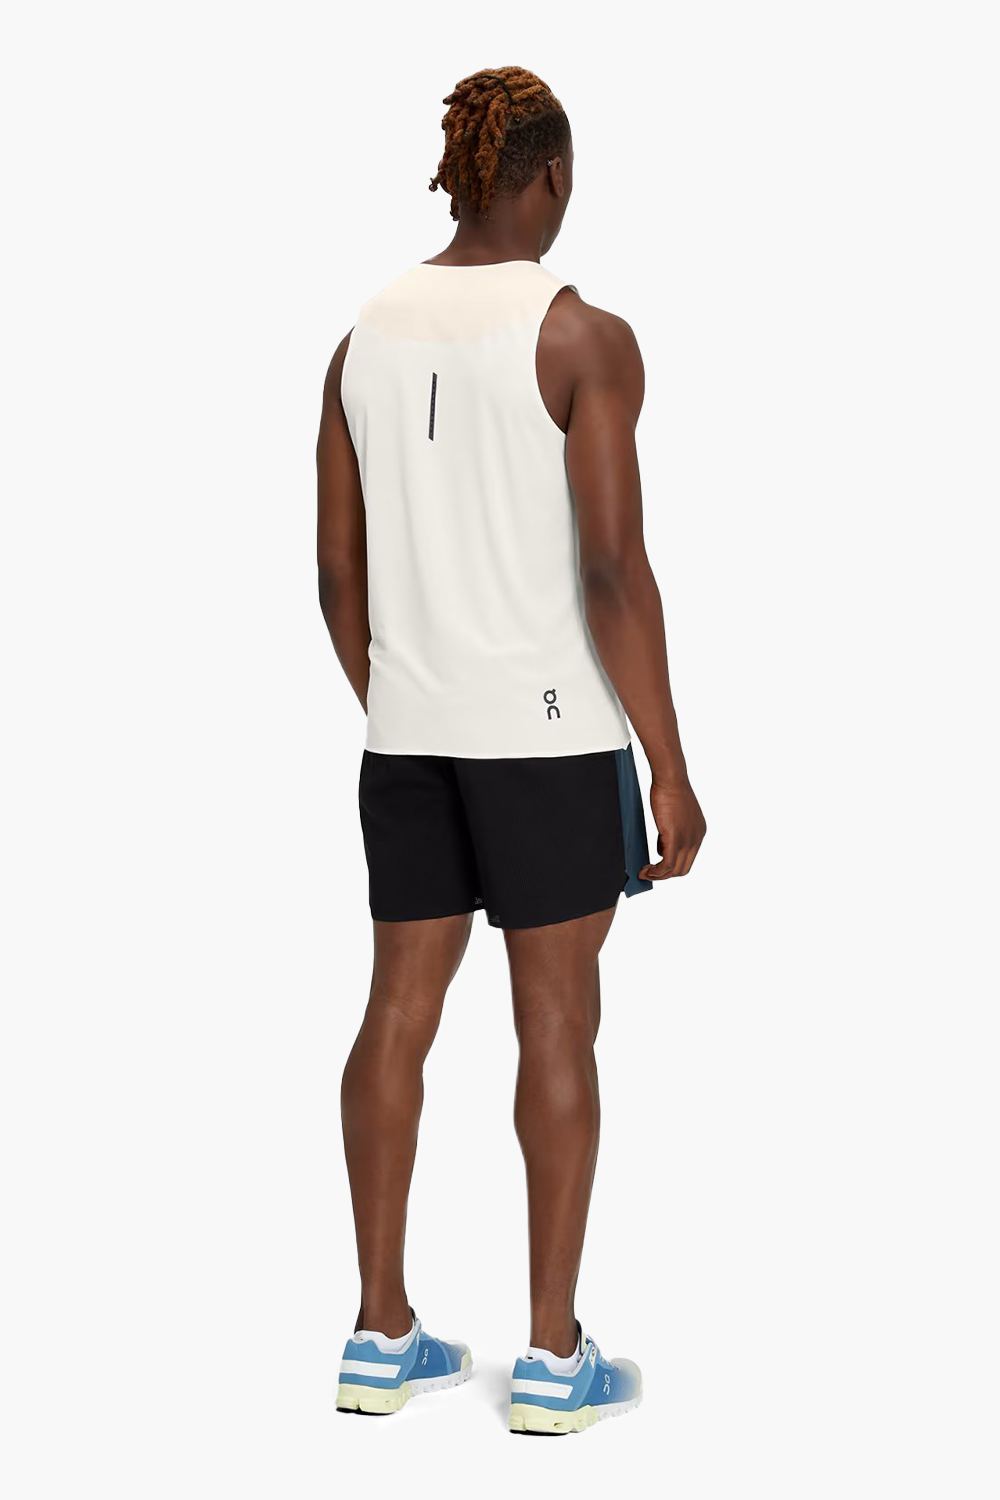 ON | Men's Lightweight Shorts in Navy/Black